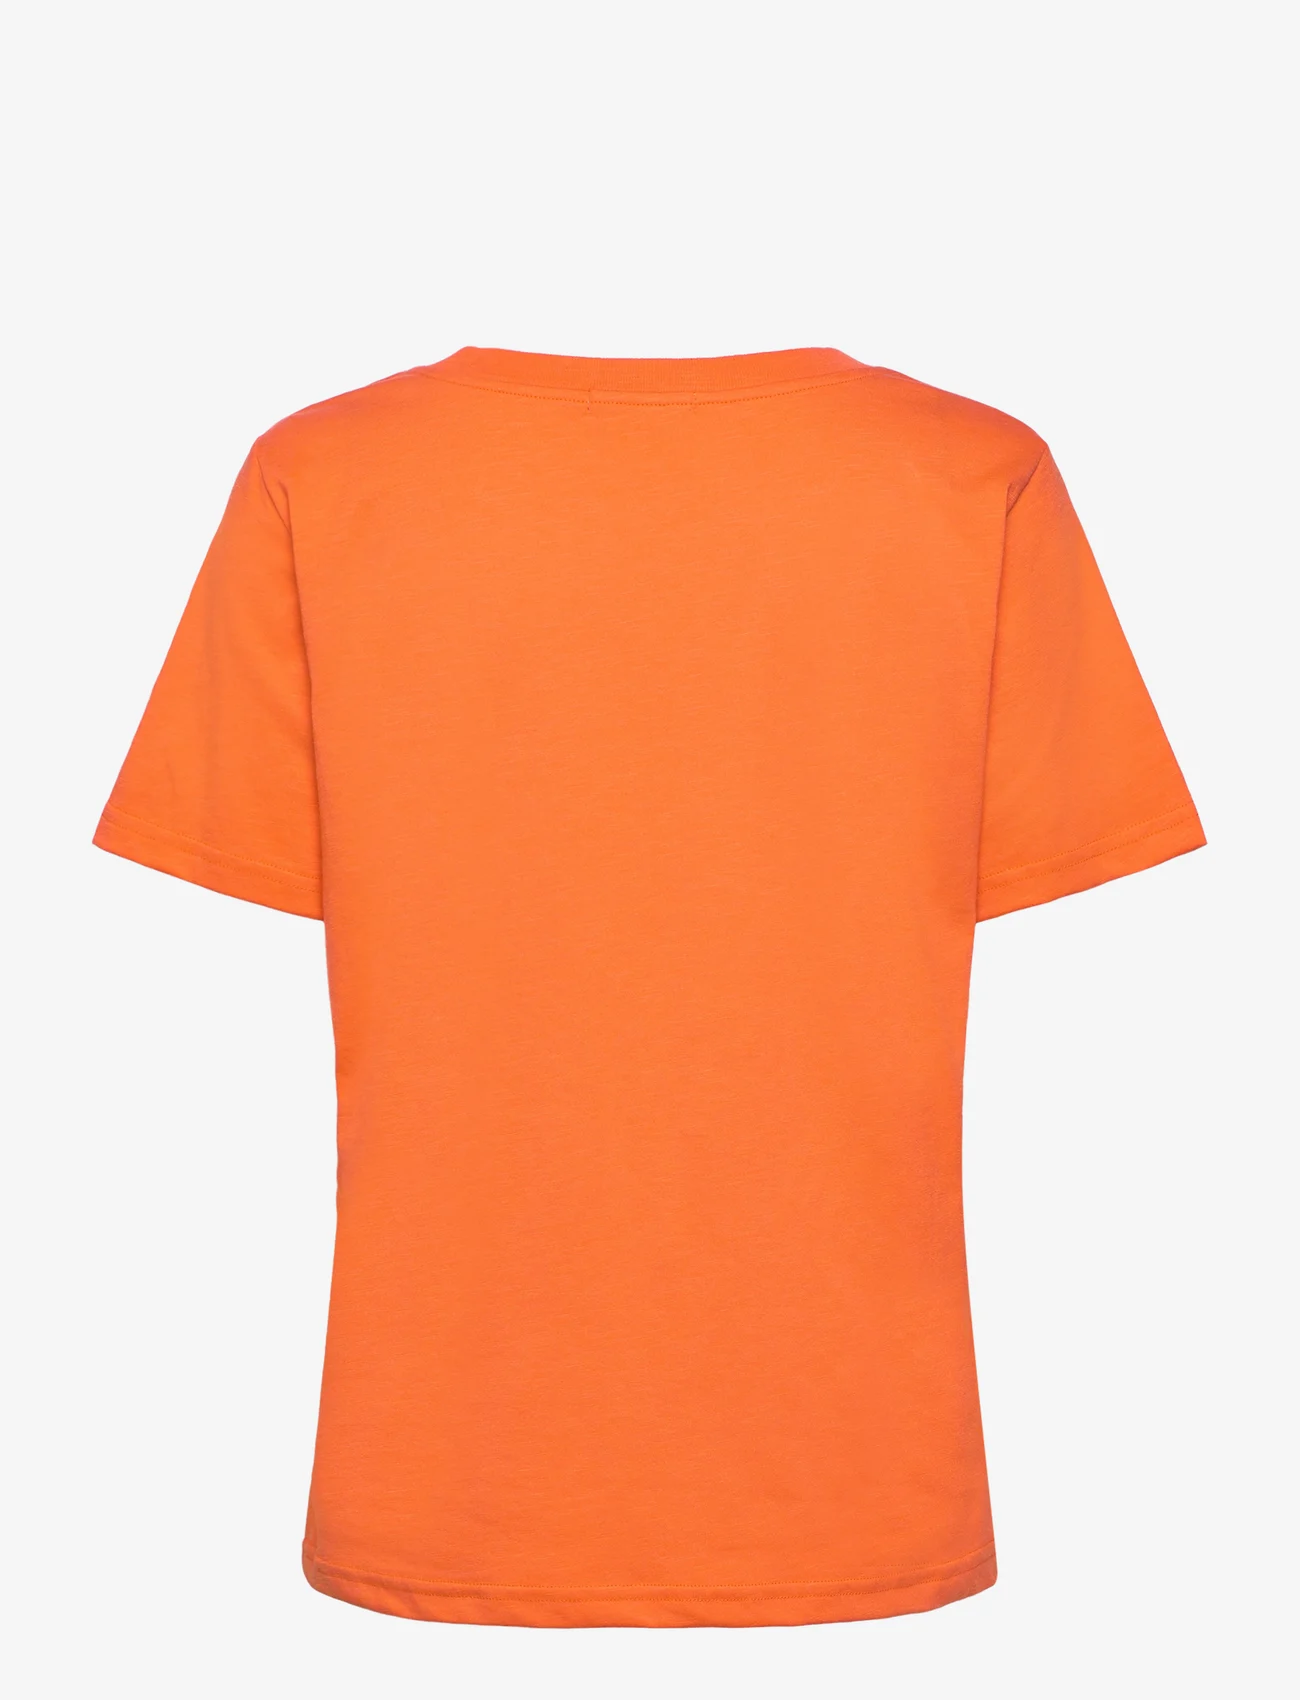 Coster Copenhagen - T-shirt with kissing lips - Mid sle - marškinėliai - mandarin - 1